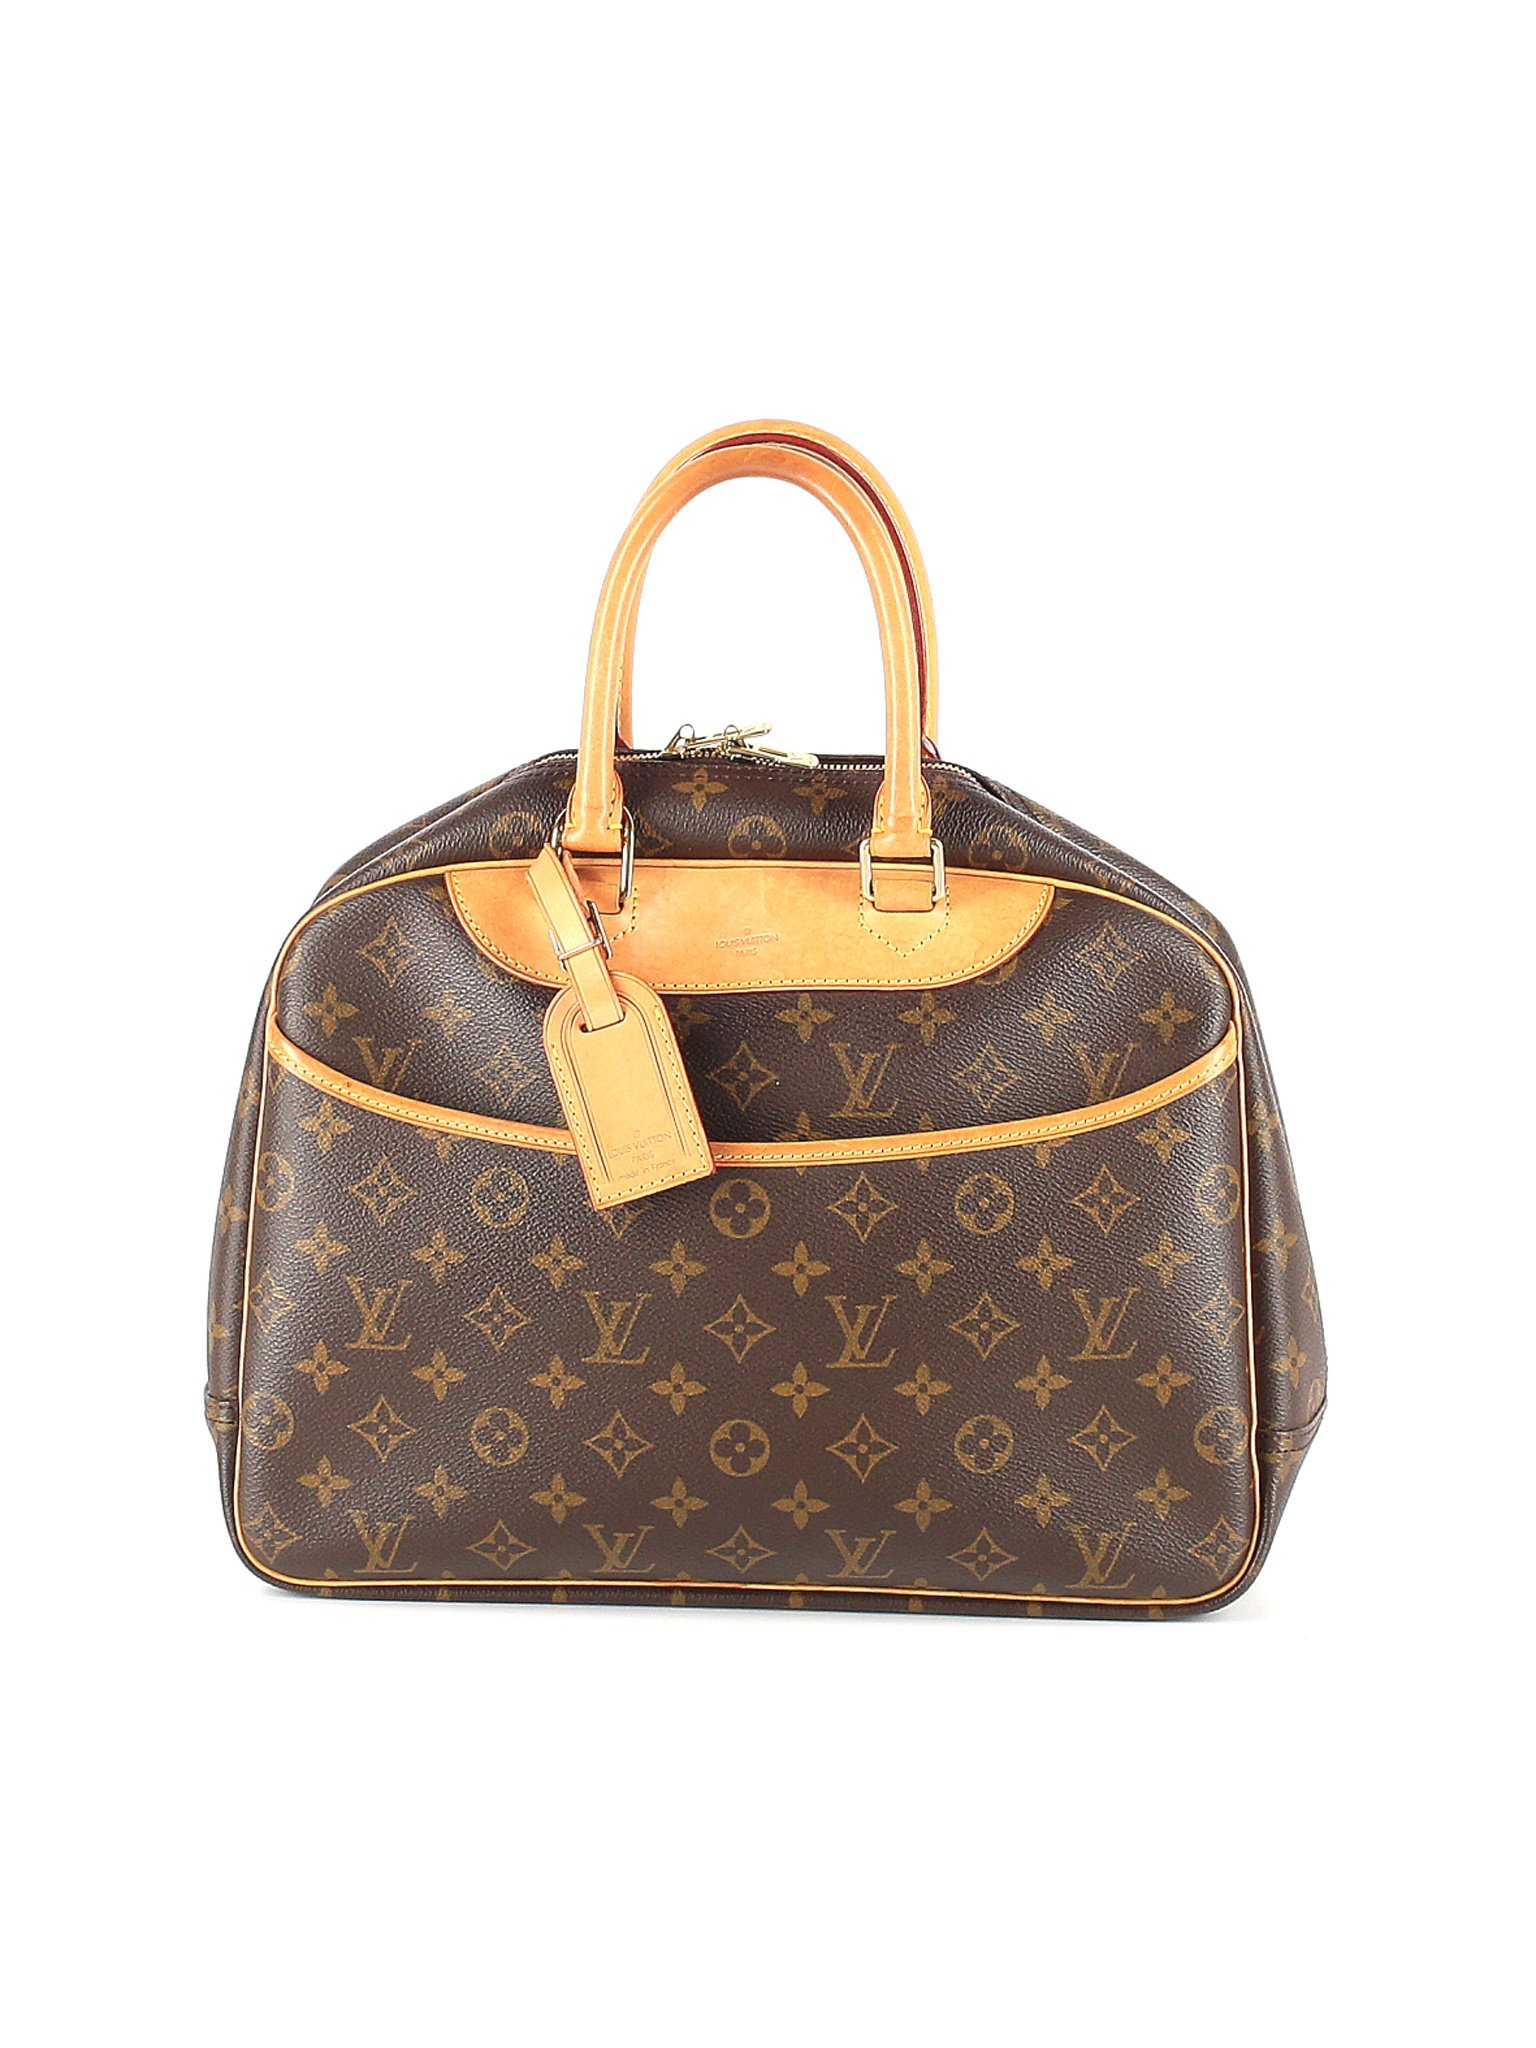 Louis Vuitton Women Brown Satchel One Size | eBay